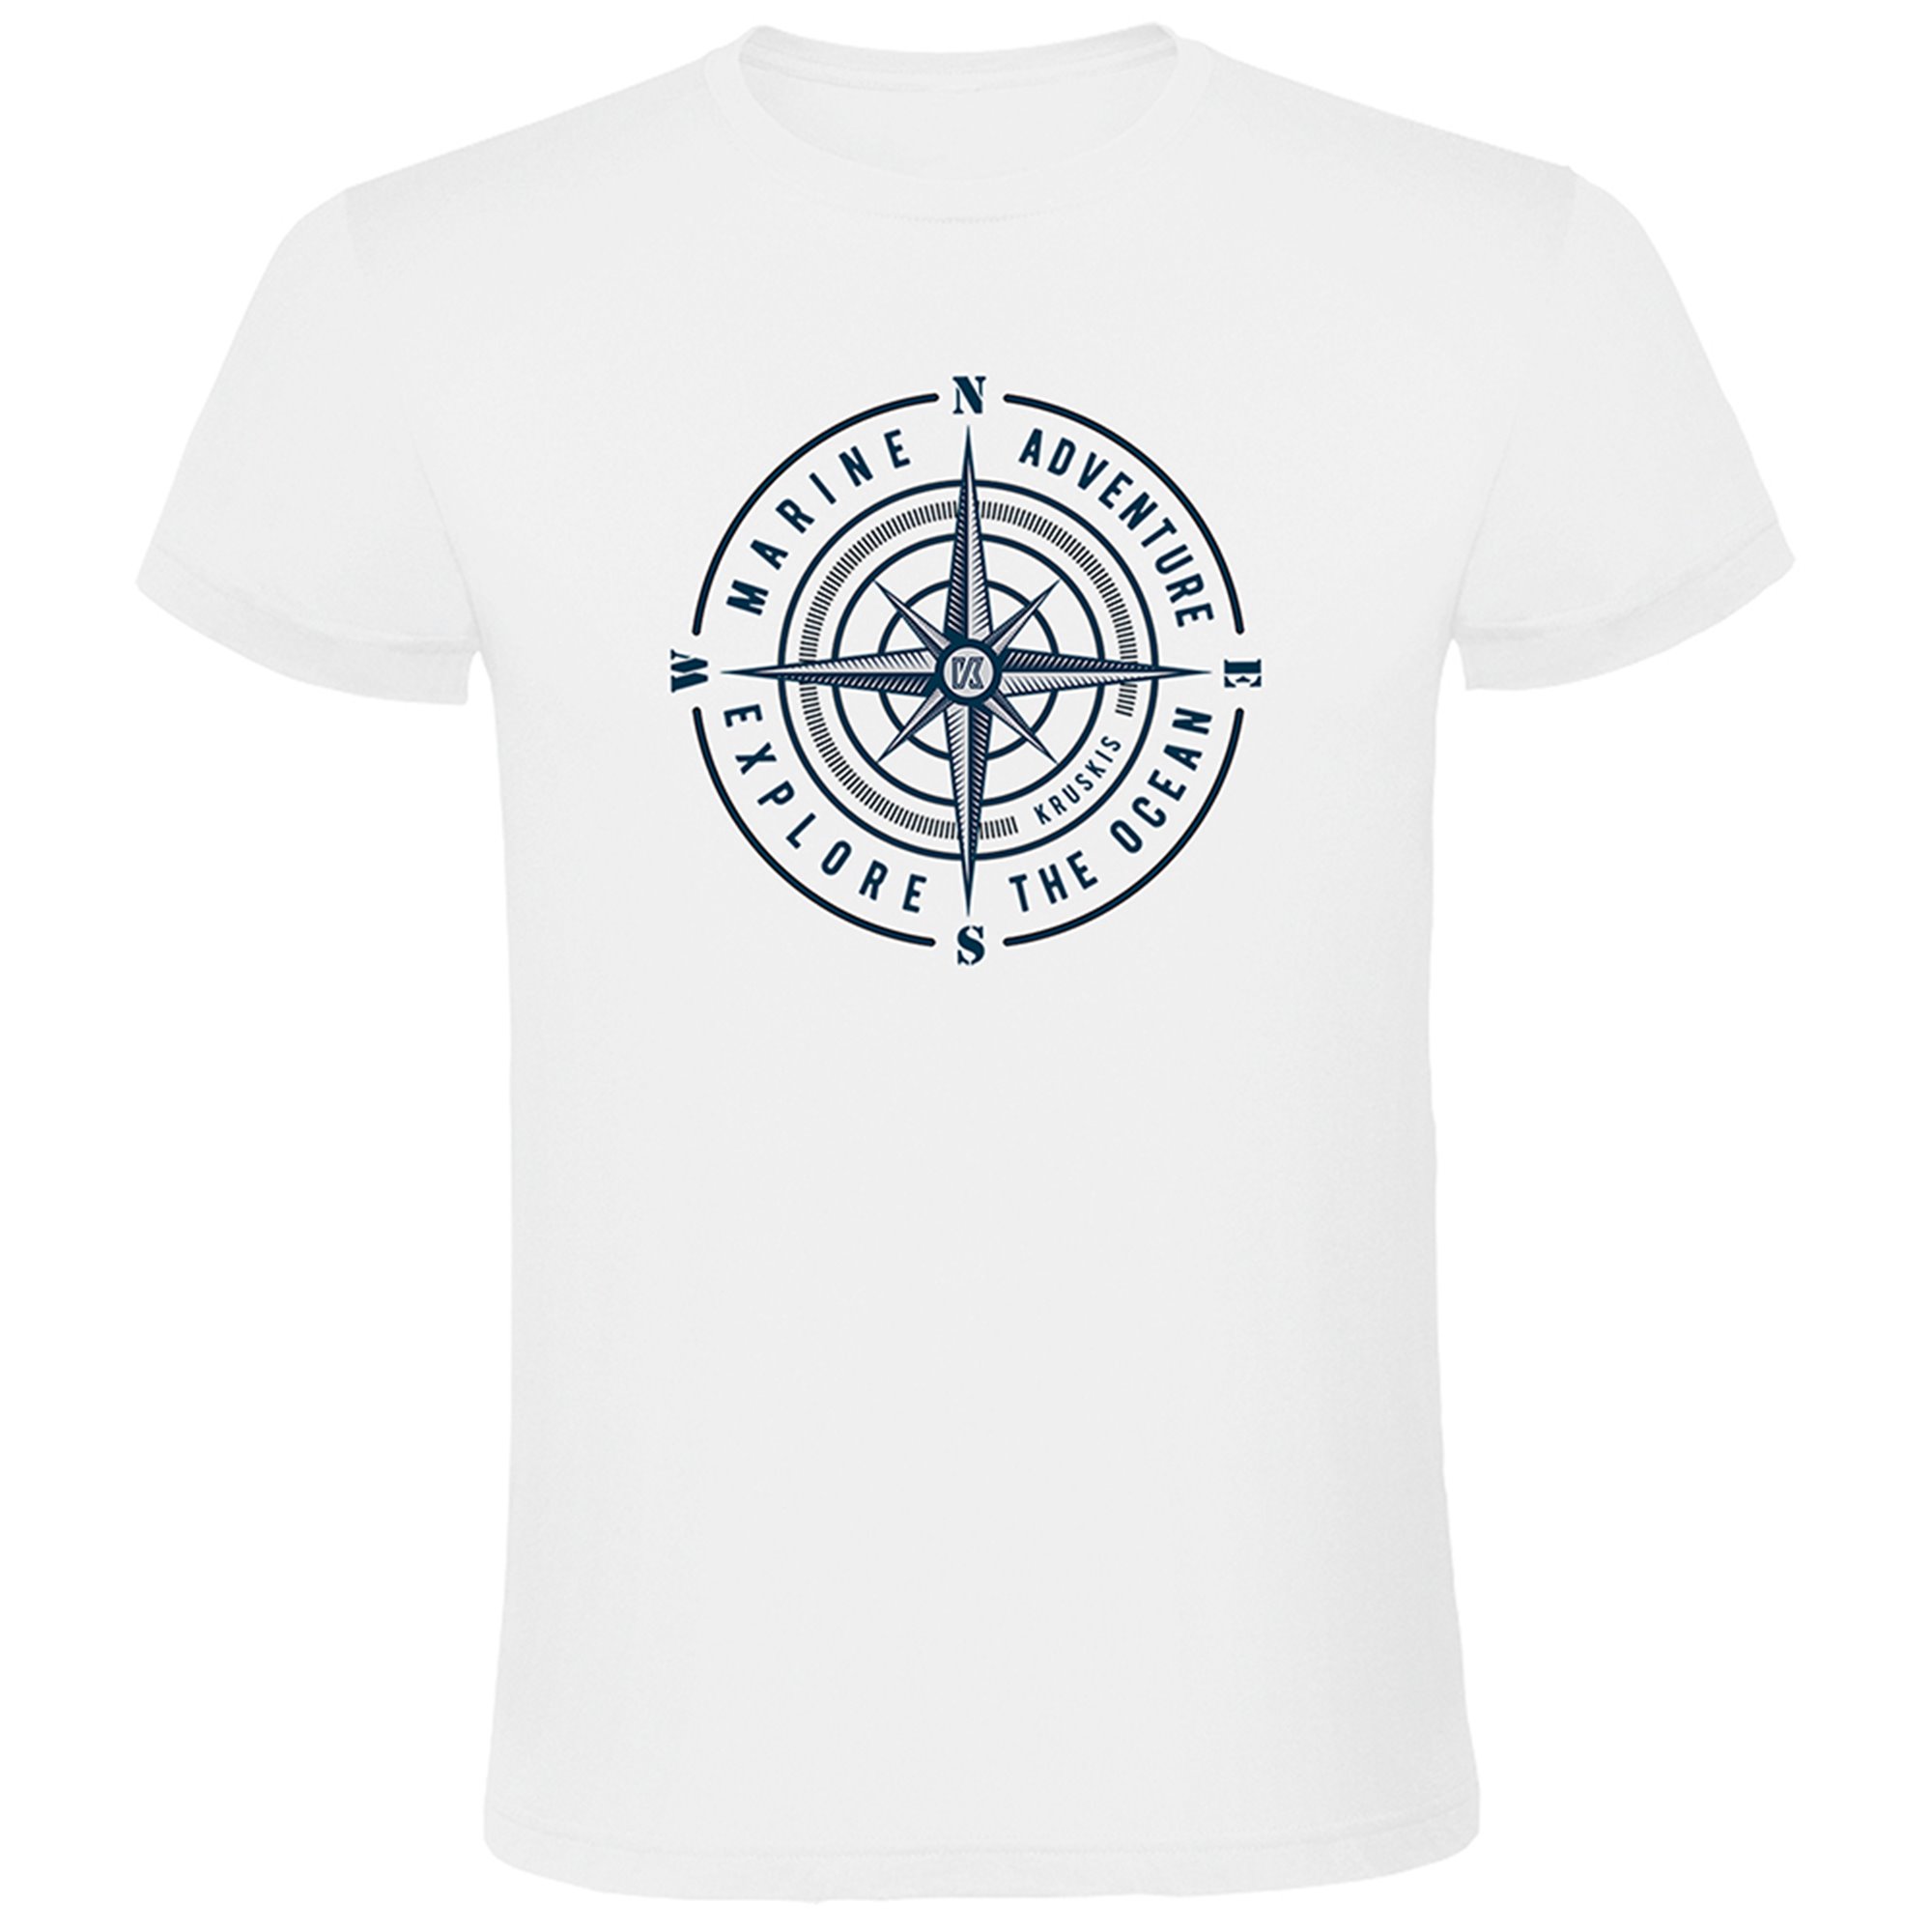 T Shirt Nautico Compass Rose Manica Corta Uomo